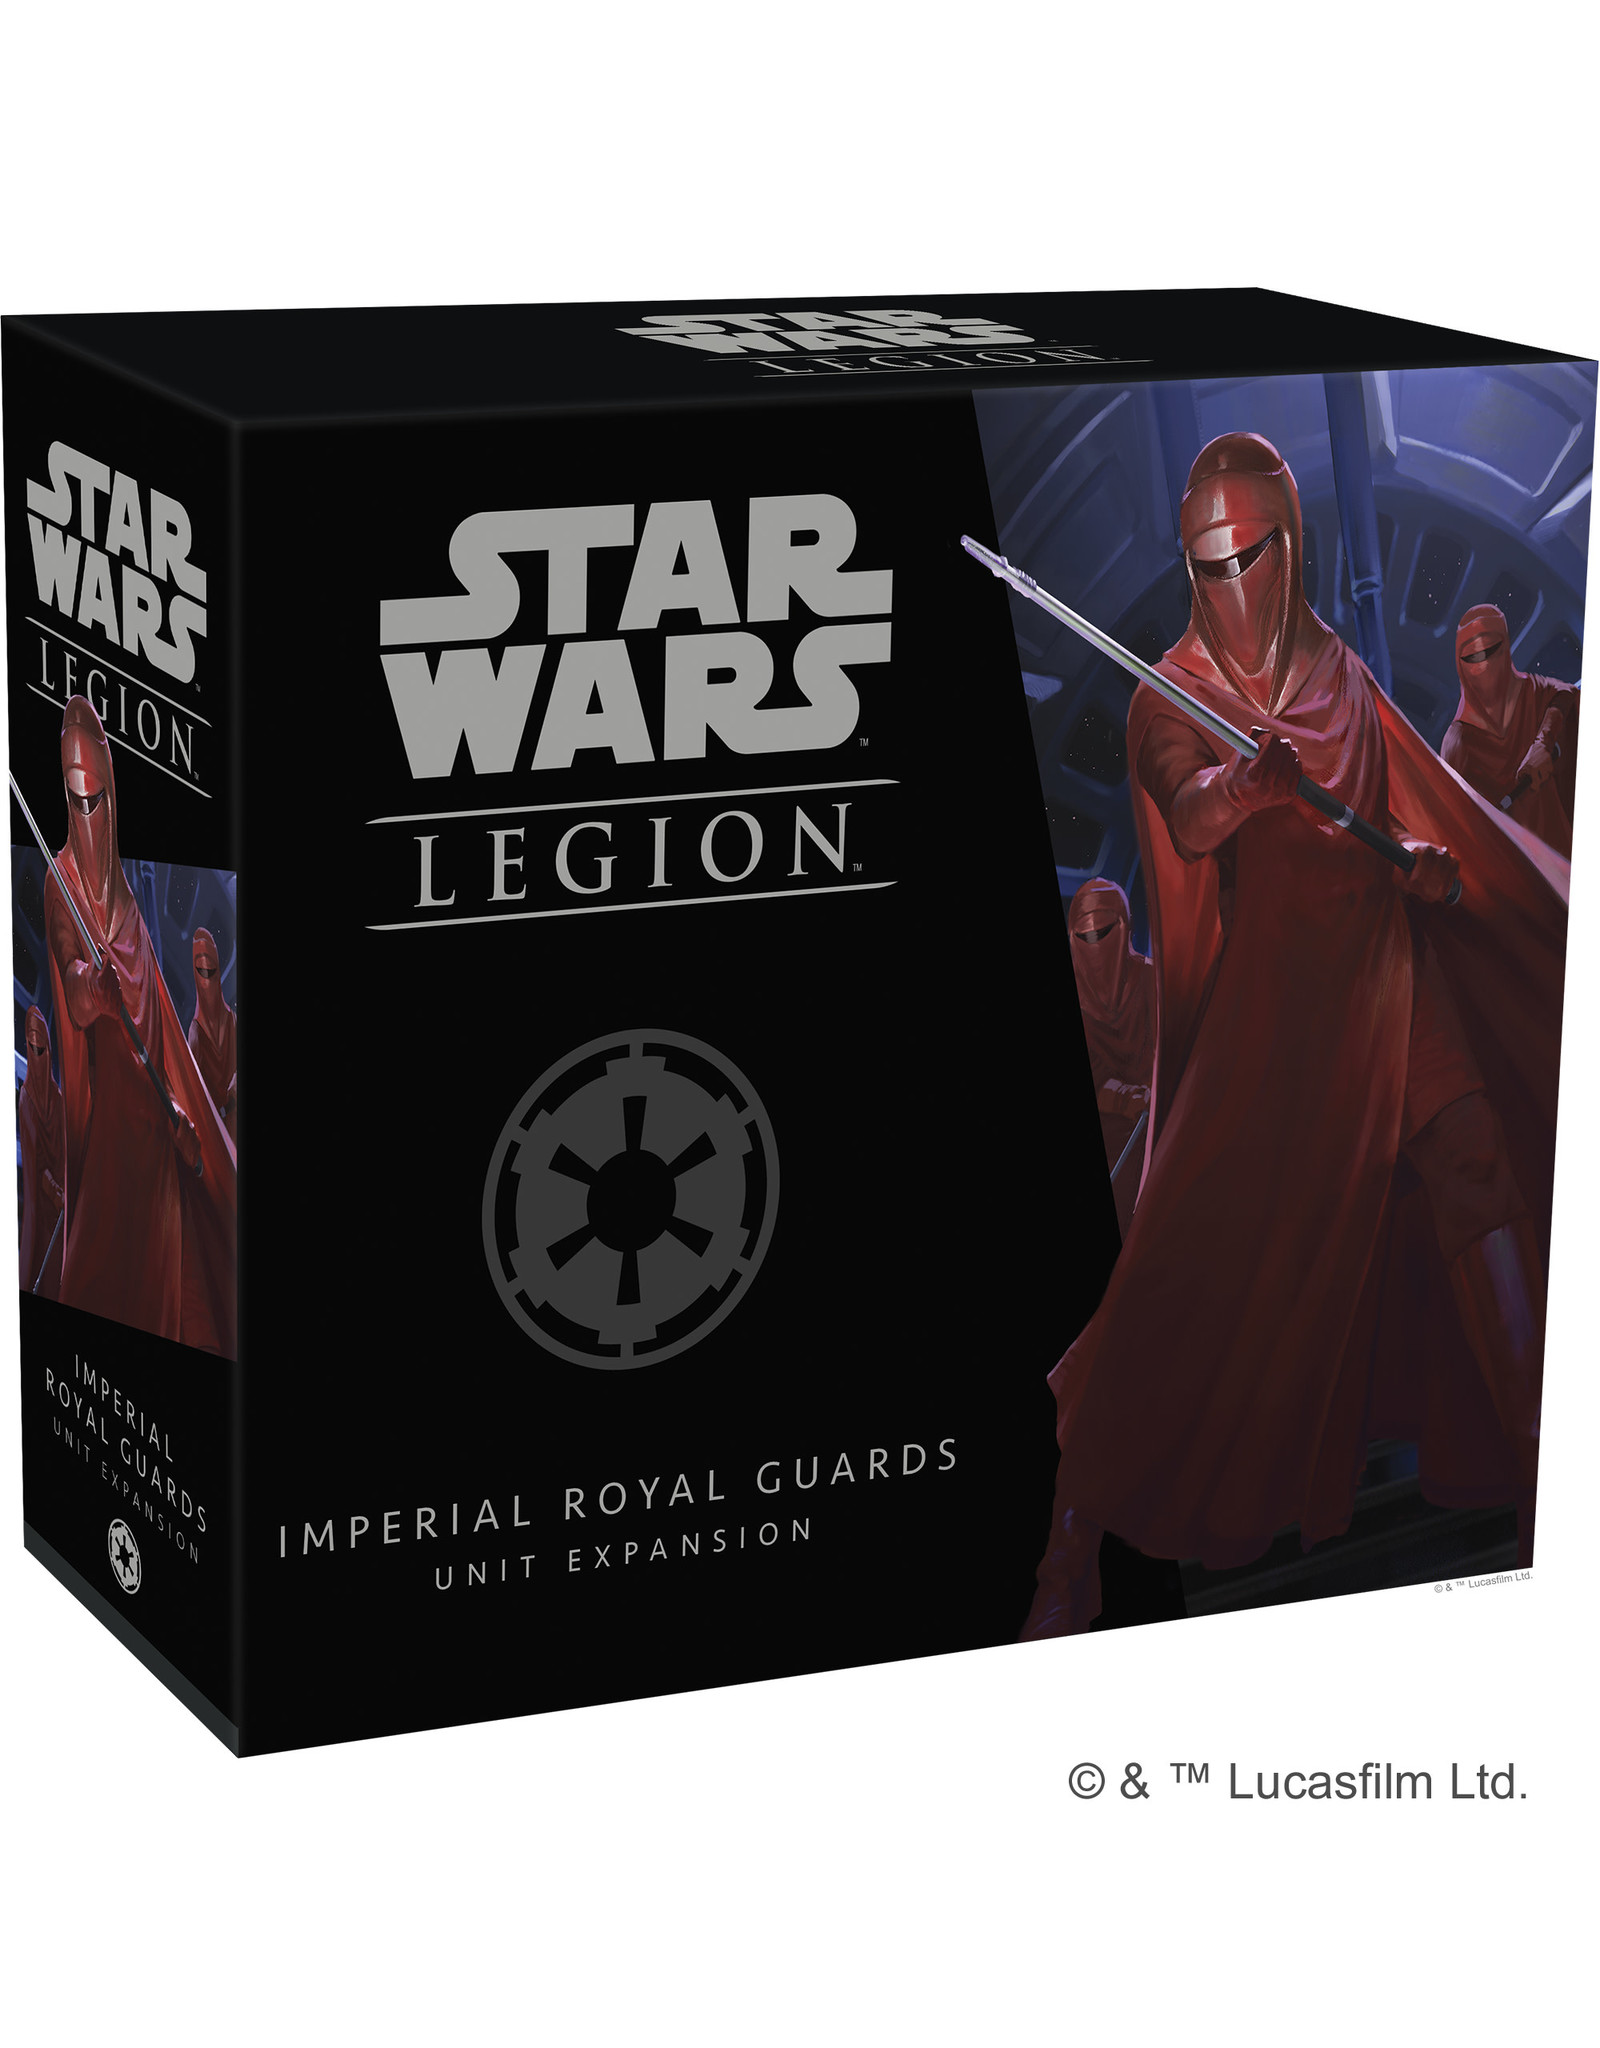 STAR WARS LEGION Star Wars Legion Imperial Royal Guards Unit Expansion